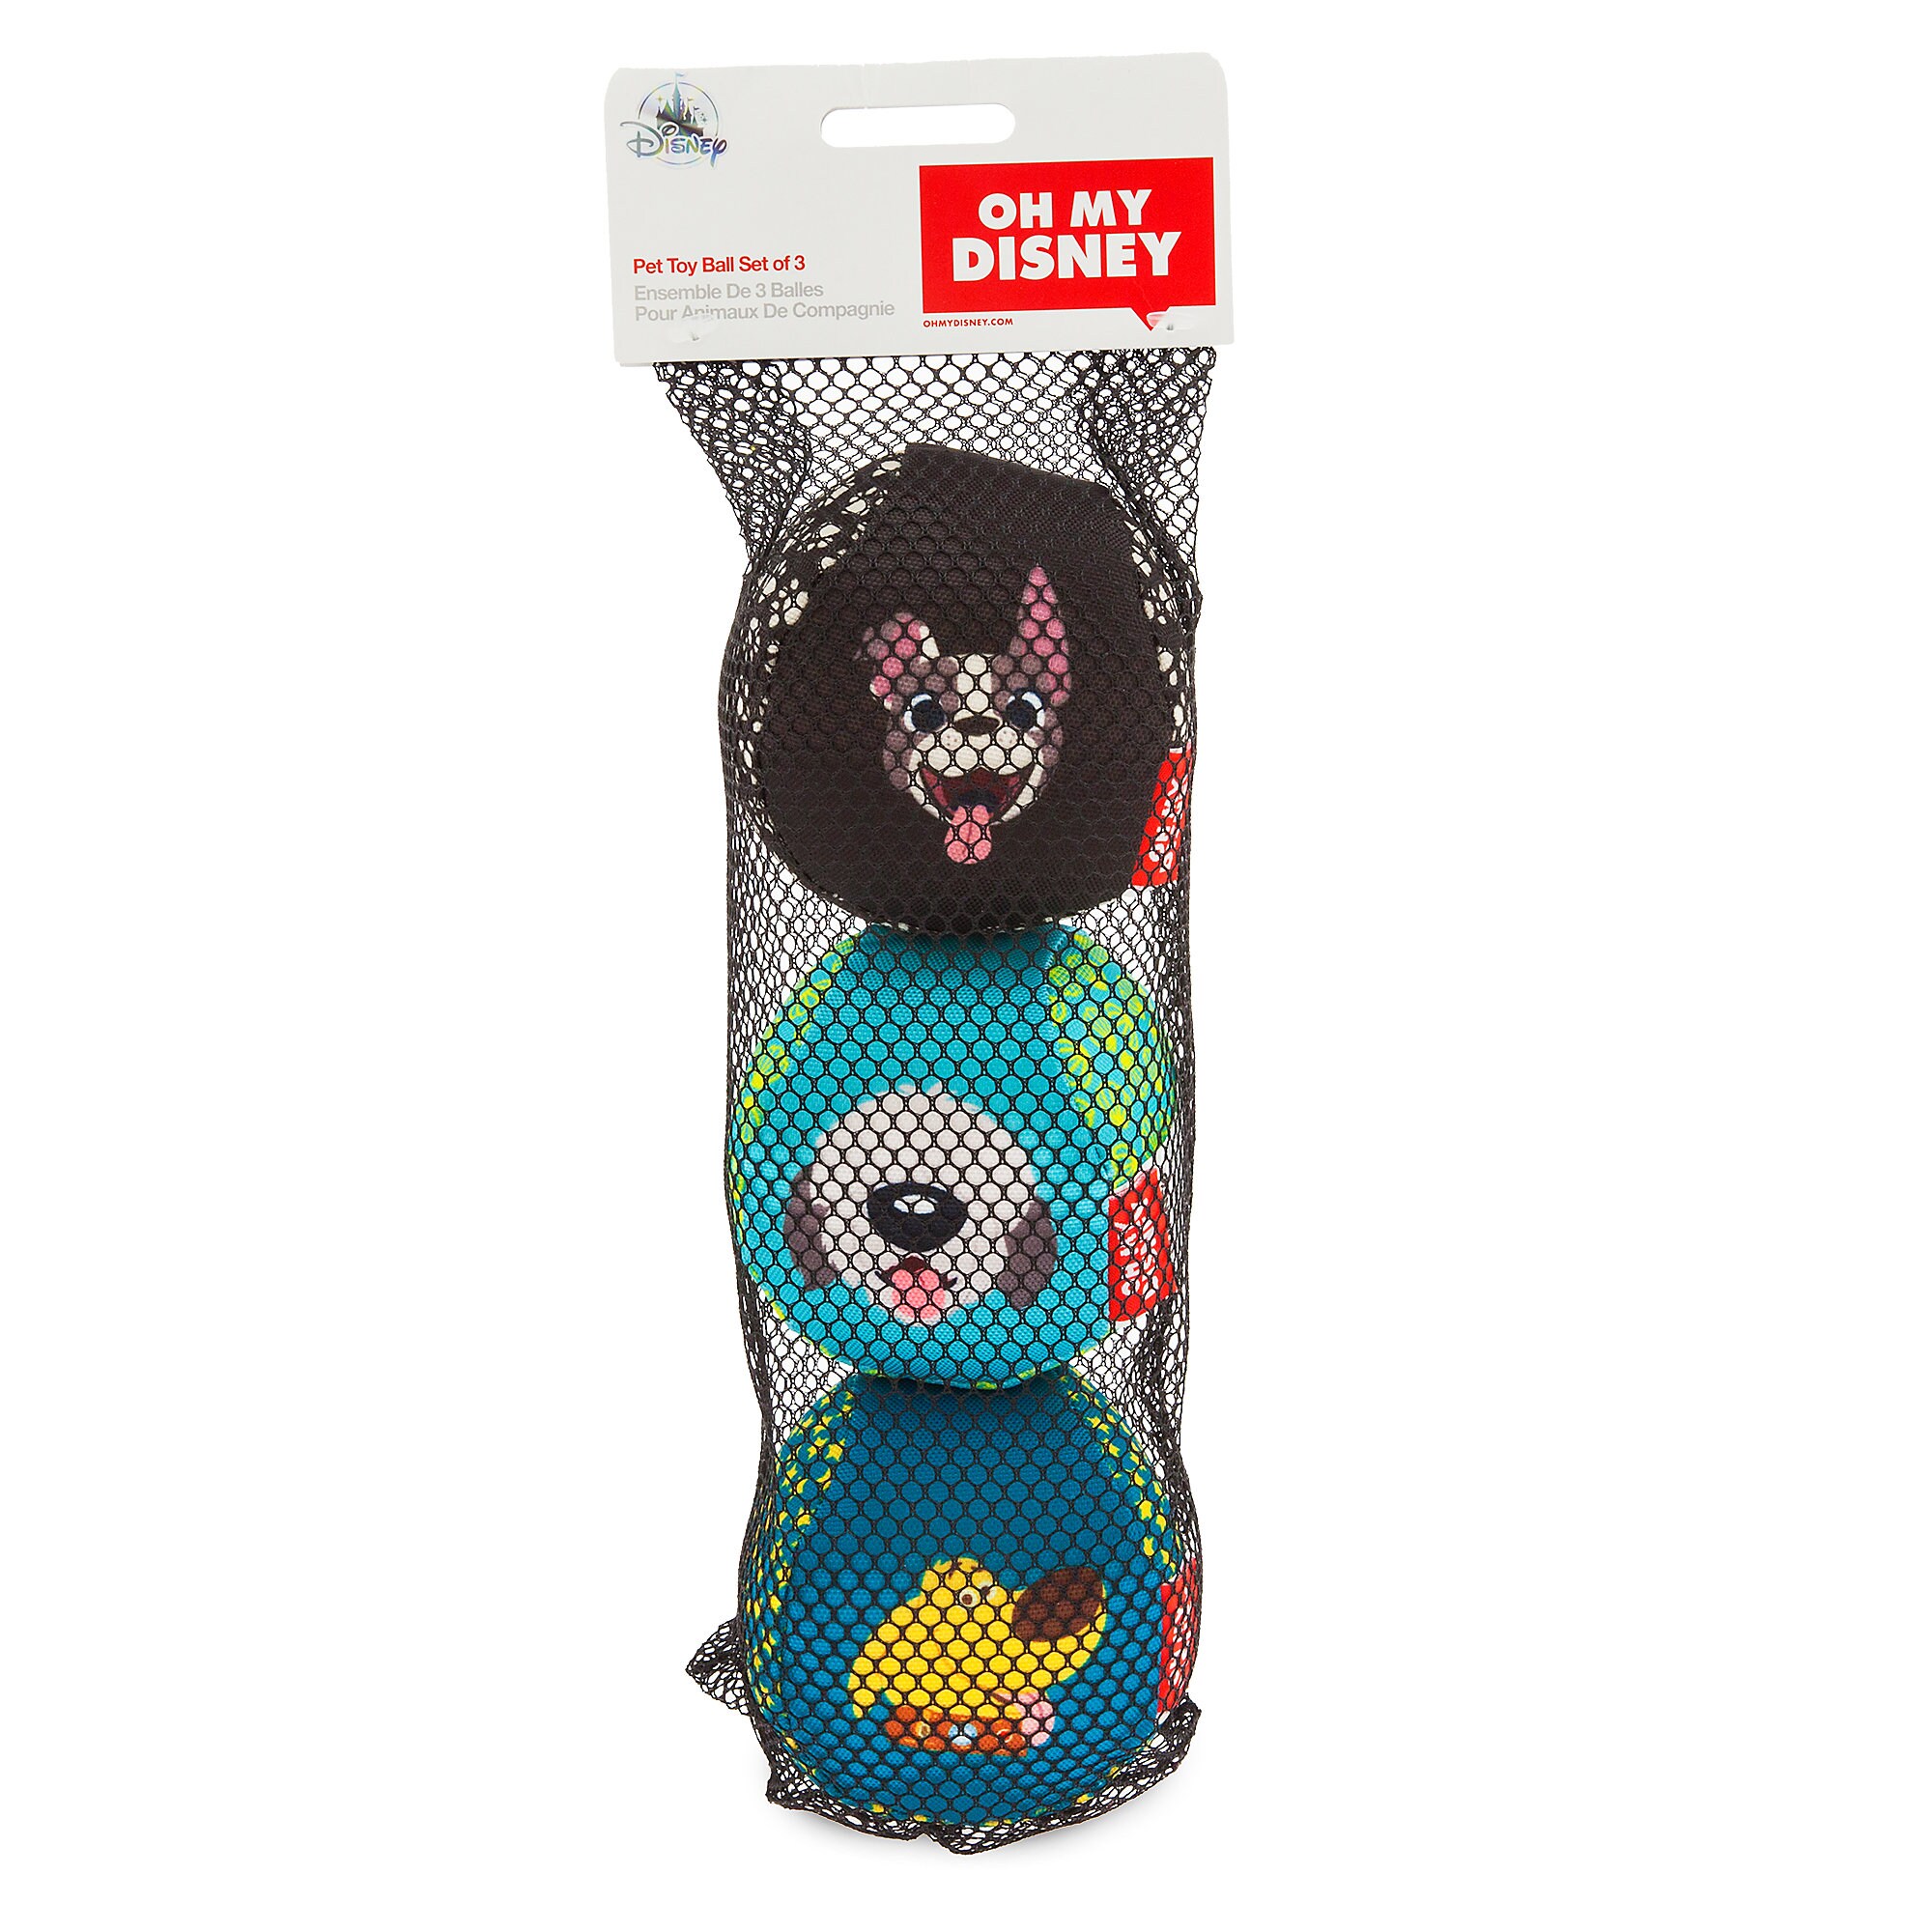 Disney Dogs Pet Toy Ball Set - Oh My Disney